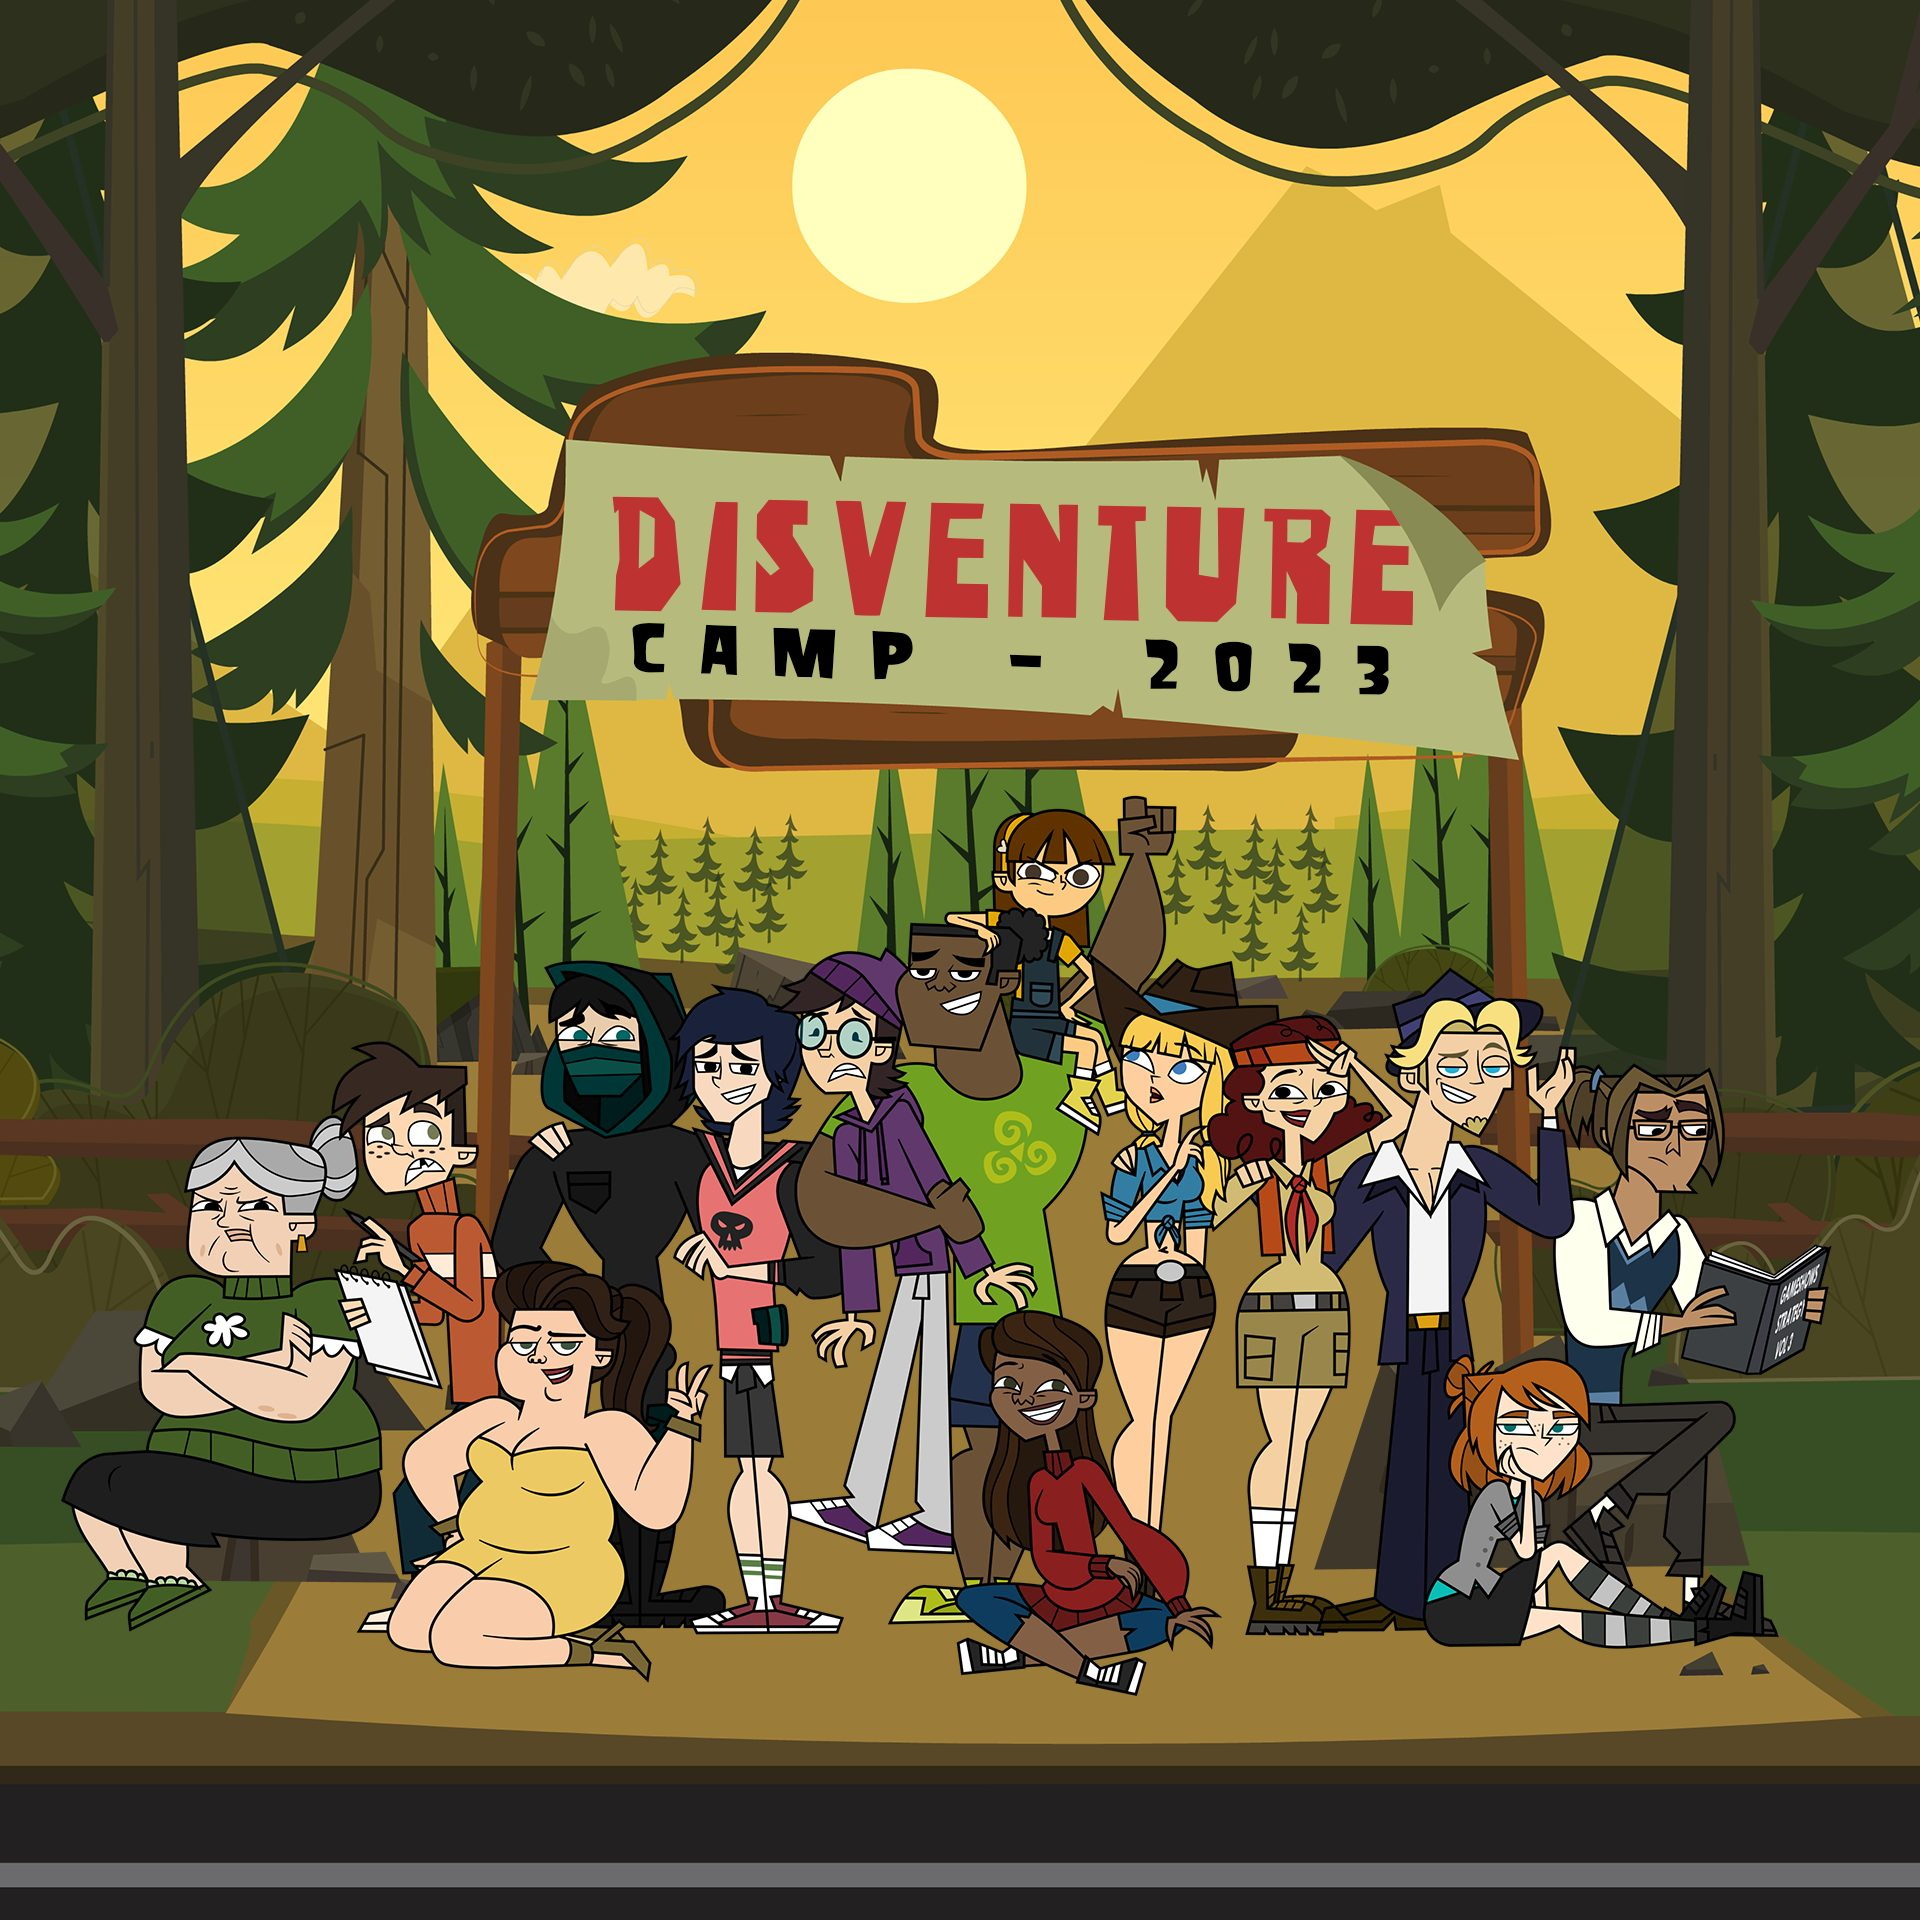 Disventure camp all stars. Camp creators hidden Adventure. Adventure Camp.